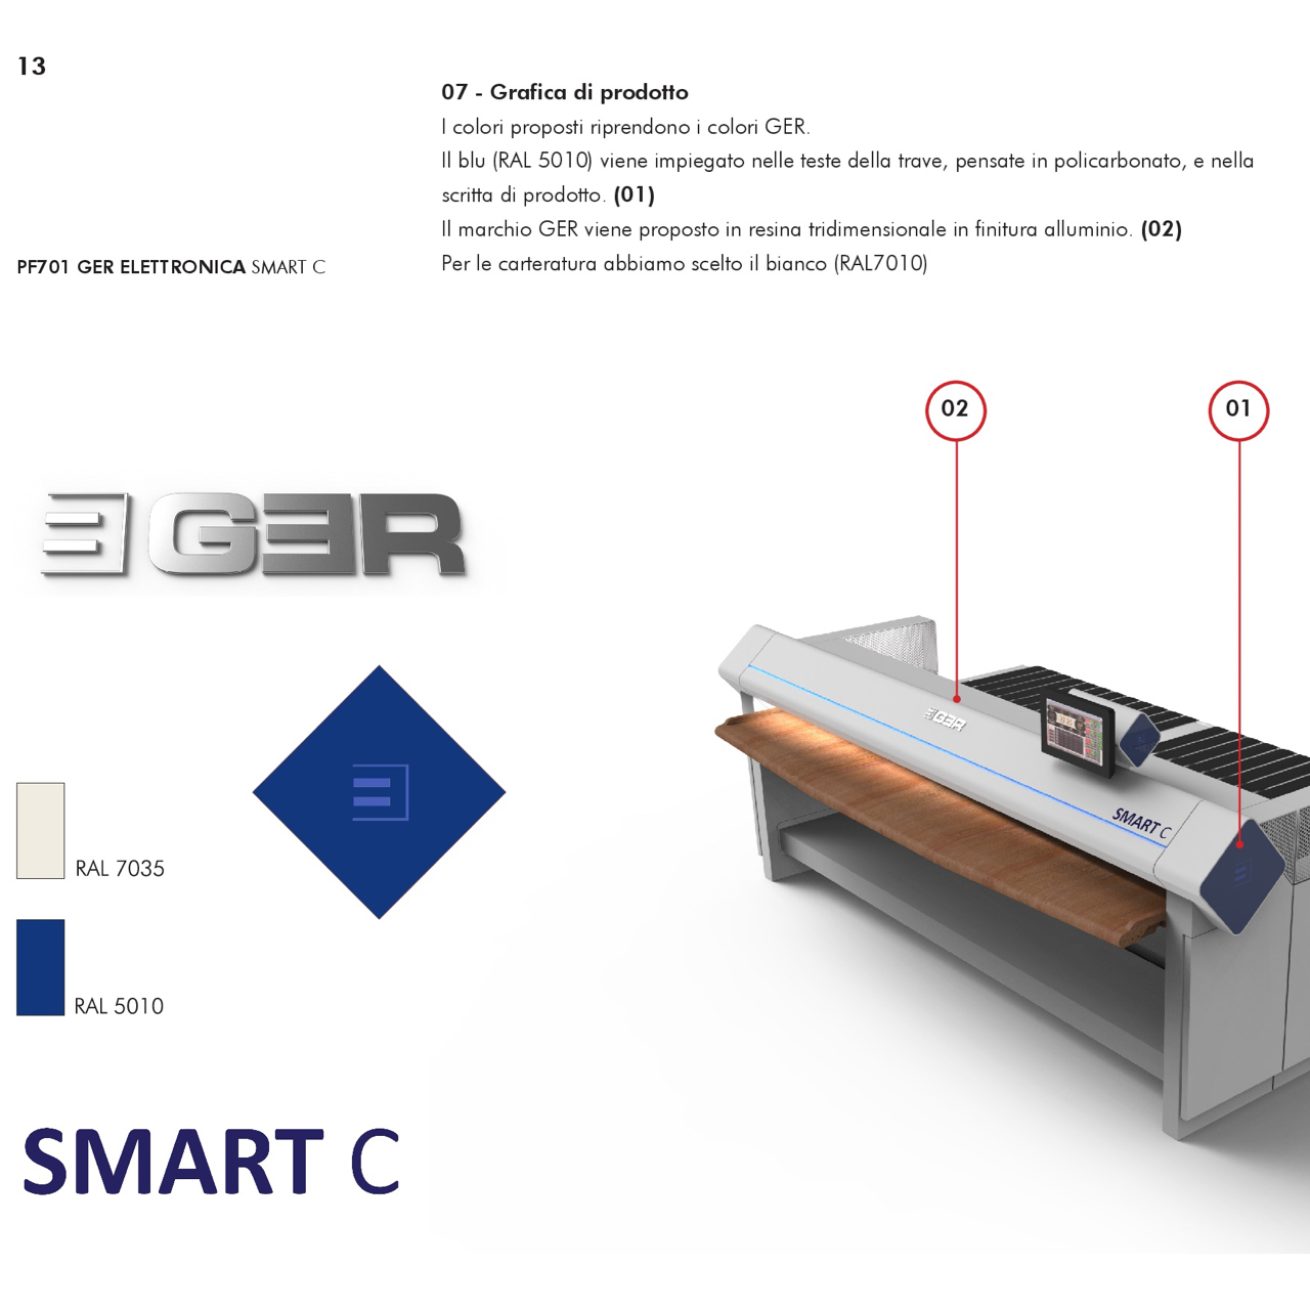 ger elettronica smart c 2022 industrial design ed engineering carrozzerie per misuratrici elettroniche 4